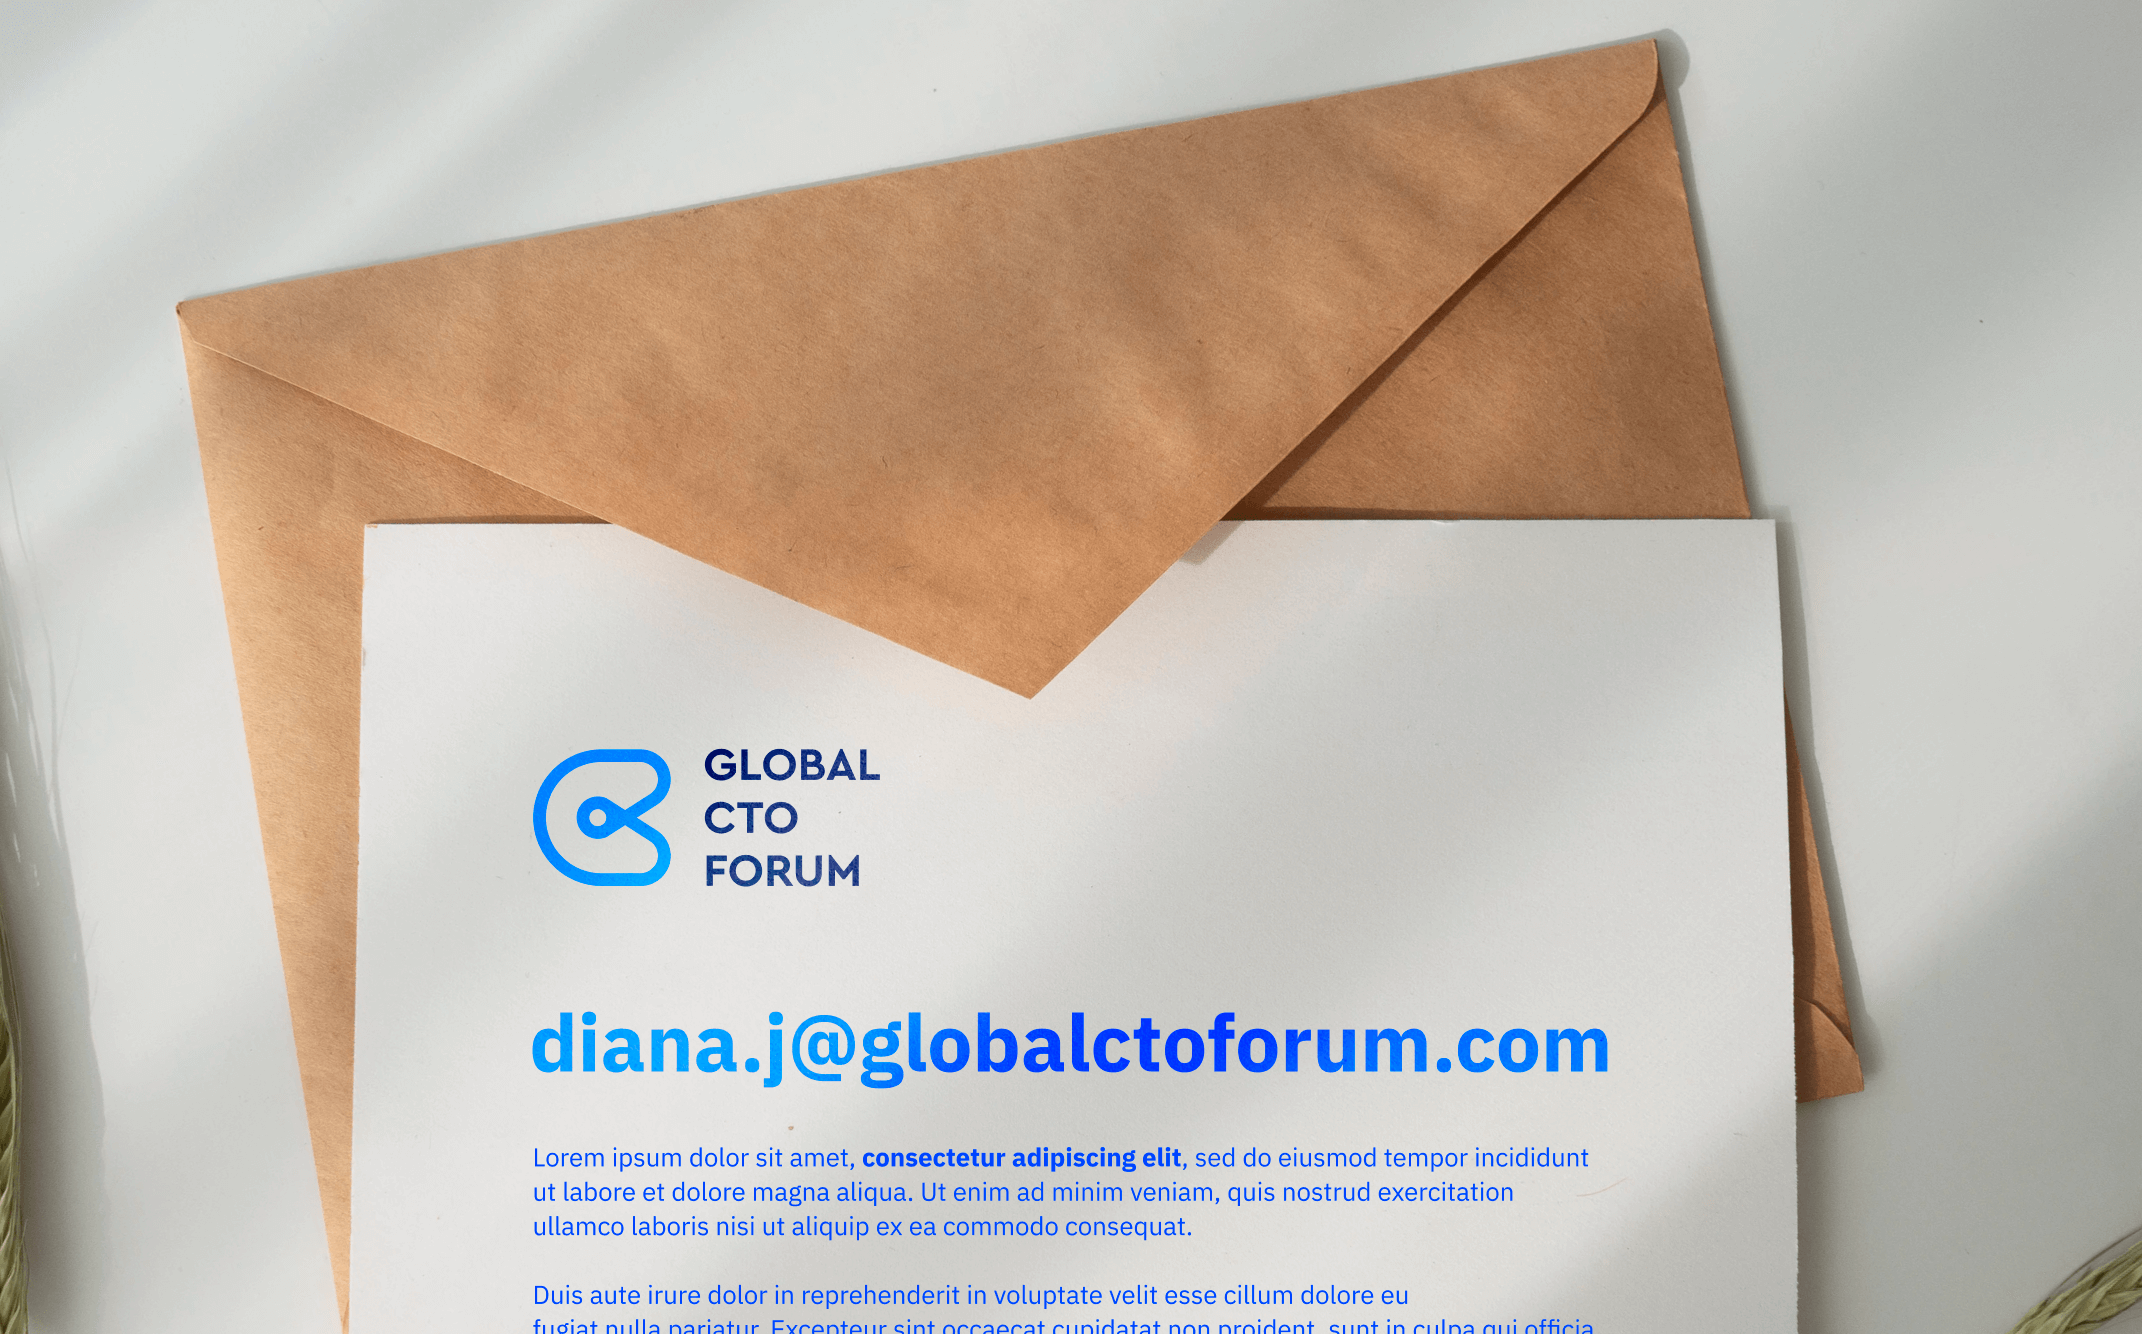 How do I create my Global CTO Forum E-mail Address